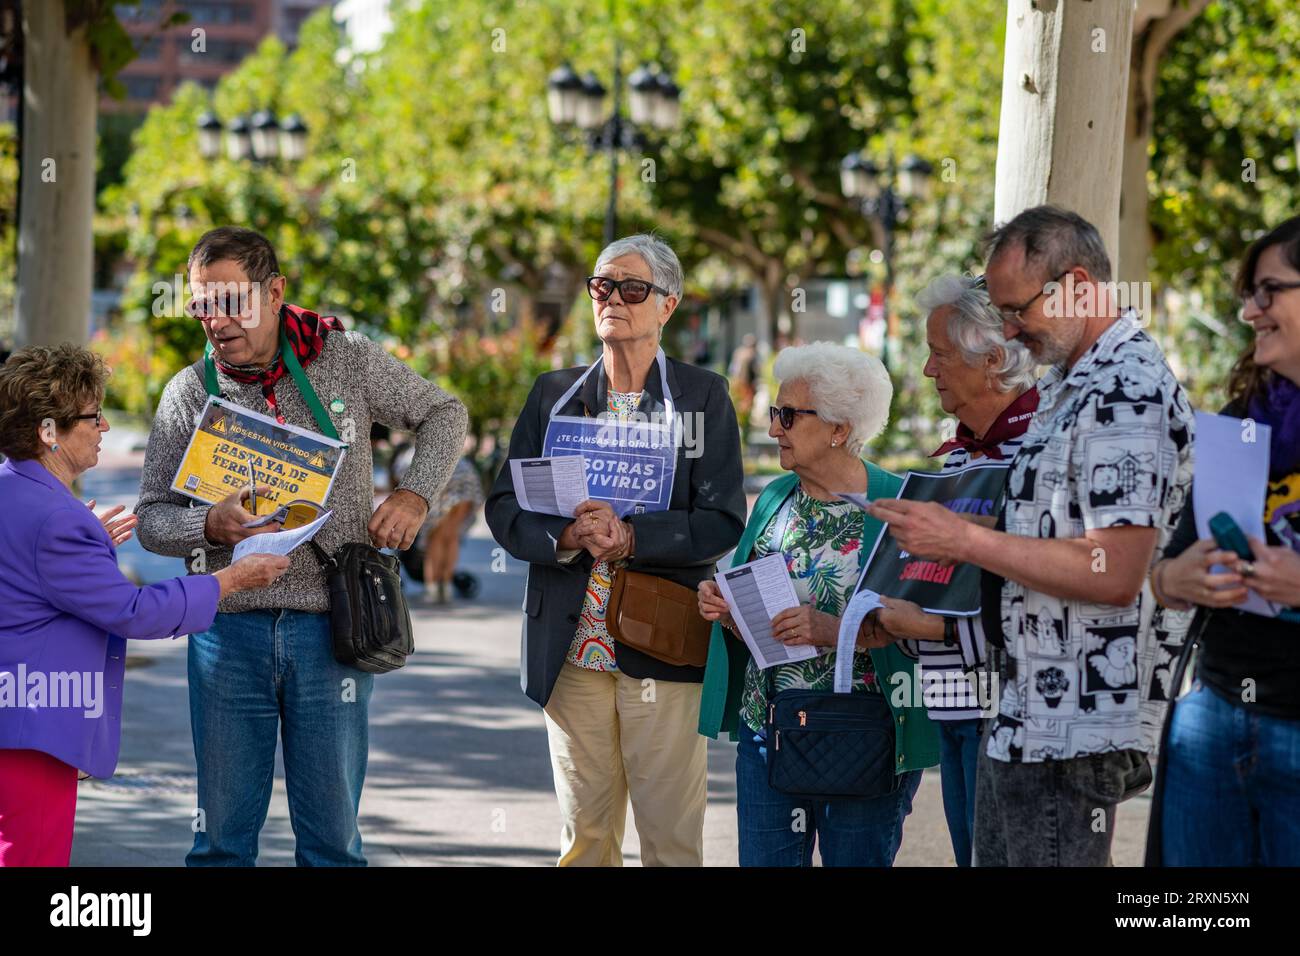 Logroño, La Rioja, Spain - September 23, 2023. Abolitionist feminist women's associations demonstrate against the legalization of prostitution in Logr Stock Photo